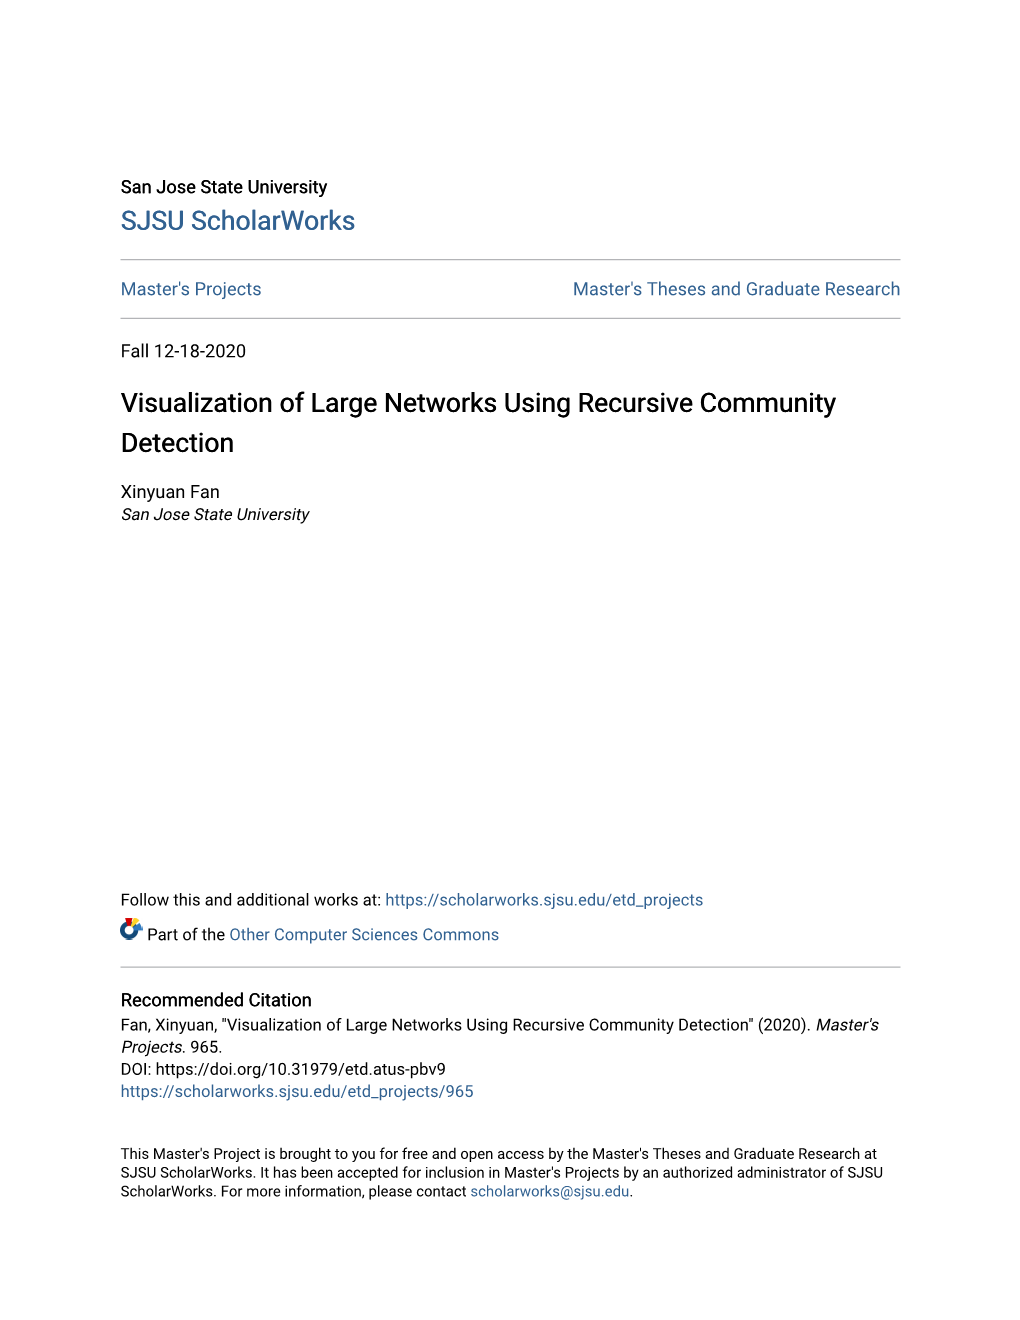 Visualization of Large Networks Using Recursive Community Detection